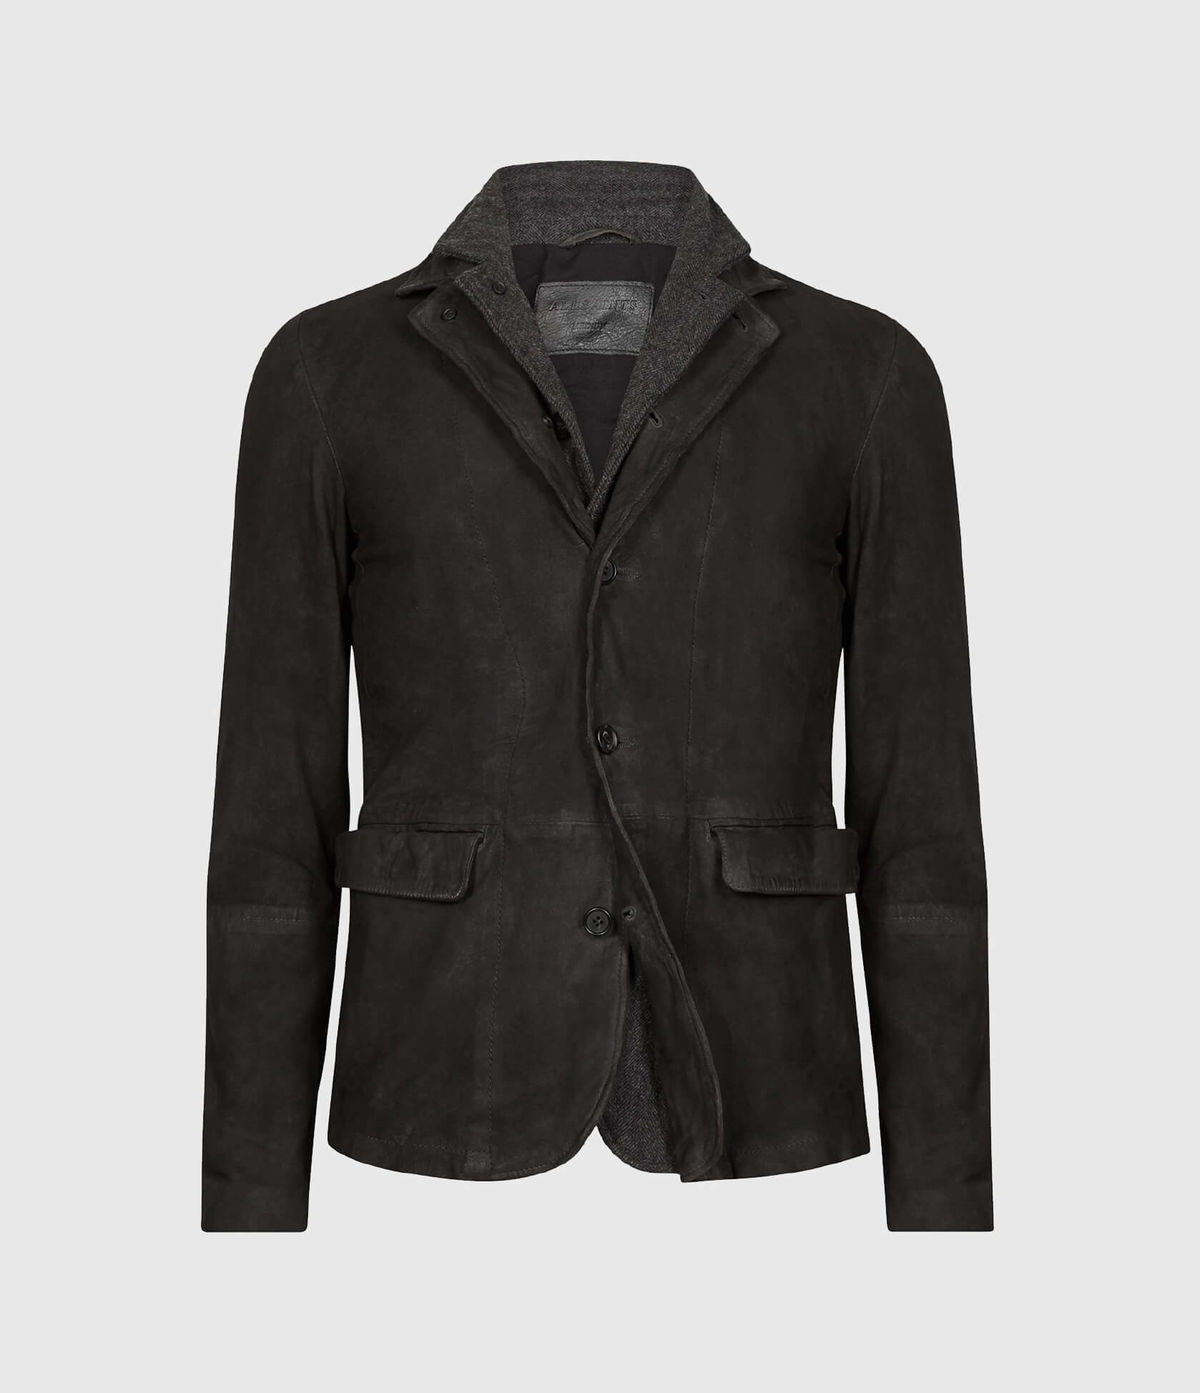 Men's Survey Leather Jacket - Hover for Measurements